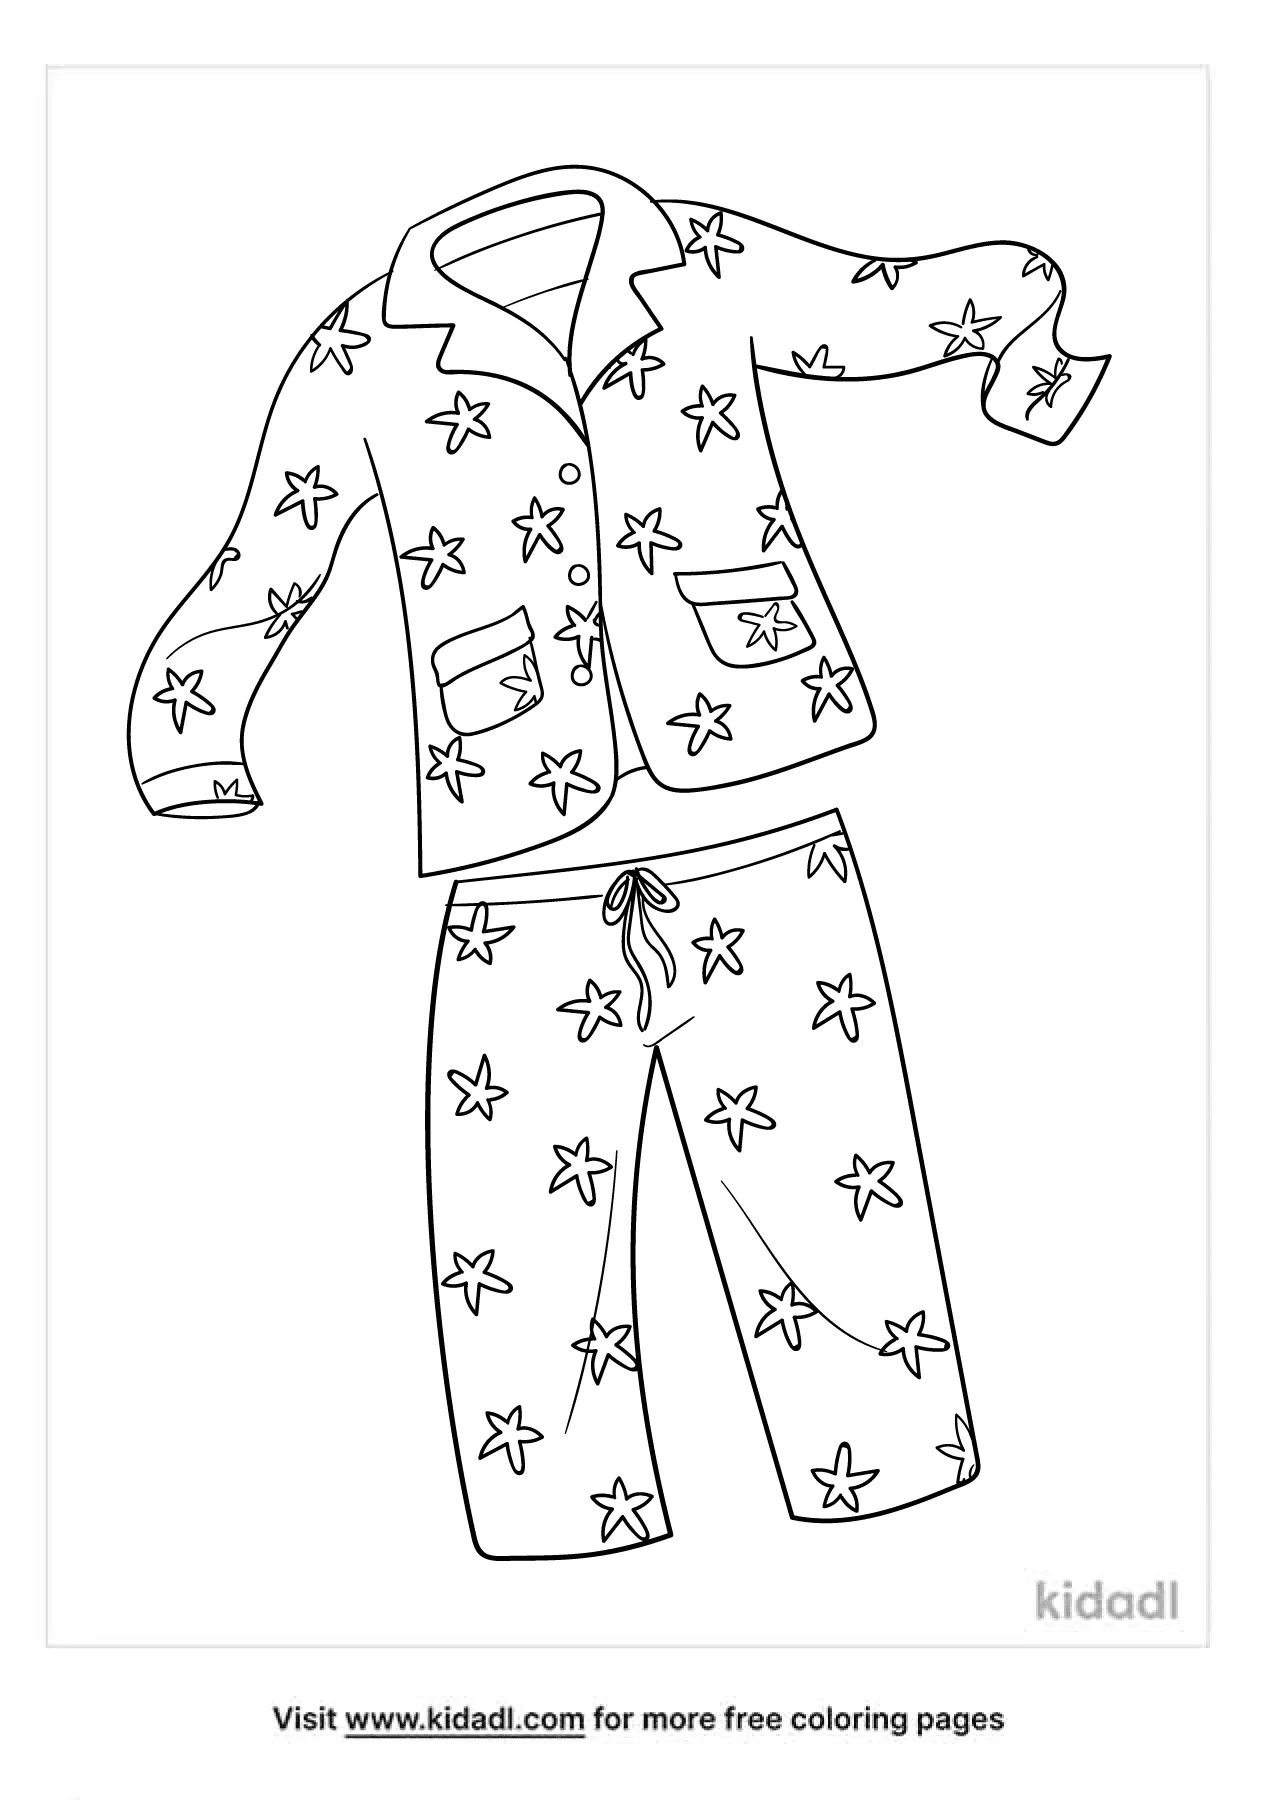 Printable Pajama Outline It #39 s perfect for a preschool or kindergarten